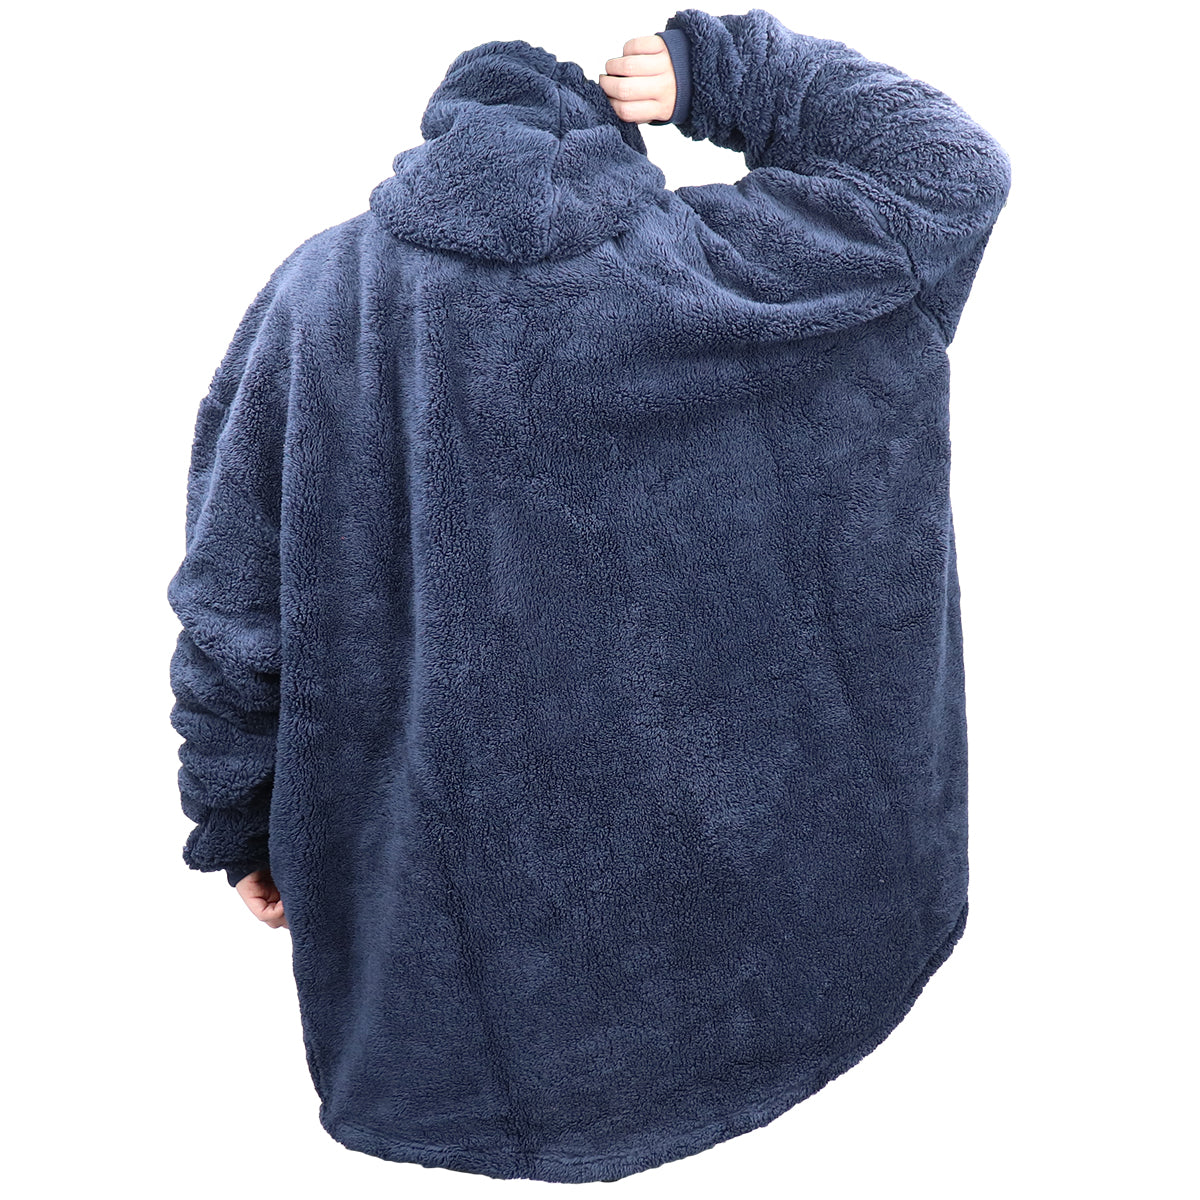 Oversized Soft Pullover Plain Hoodie Warm Fleece Blanket Plush Winter Sweatshirt, Pink Tie-Dye, Adult